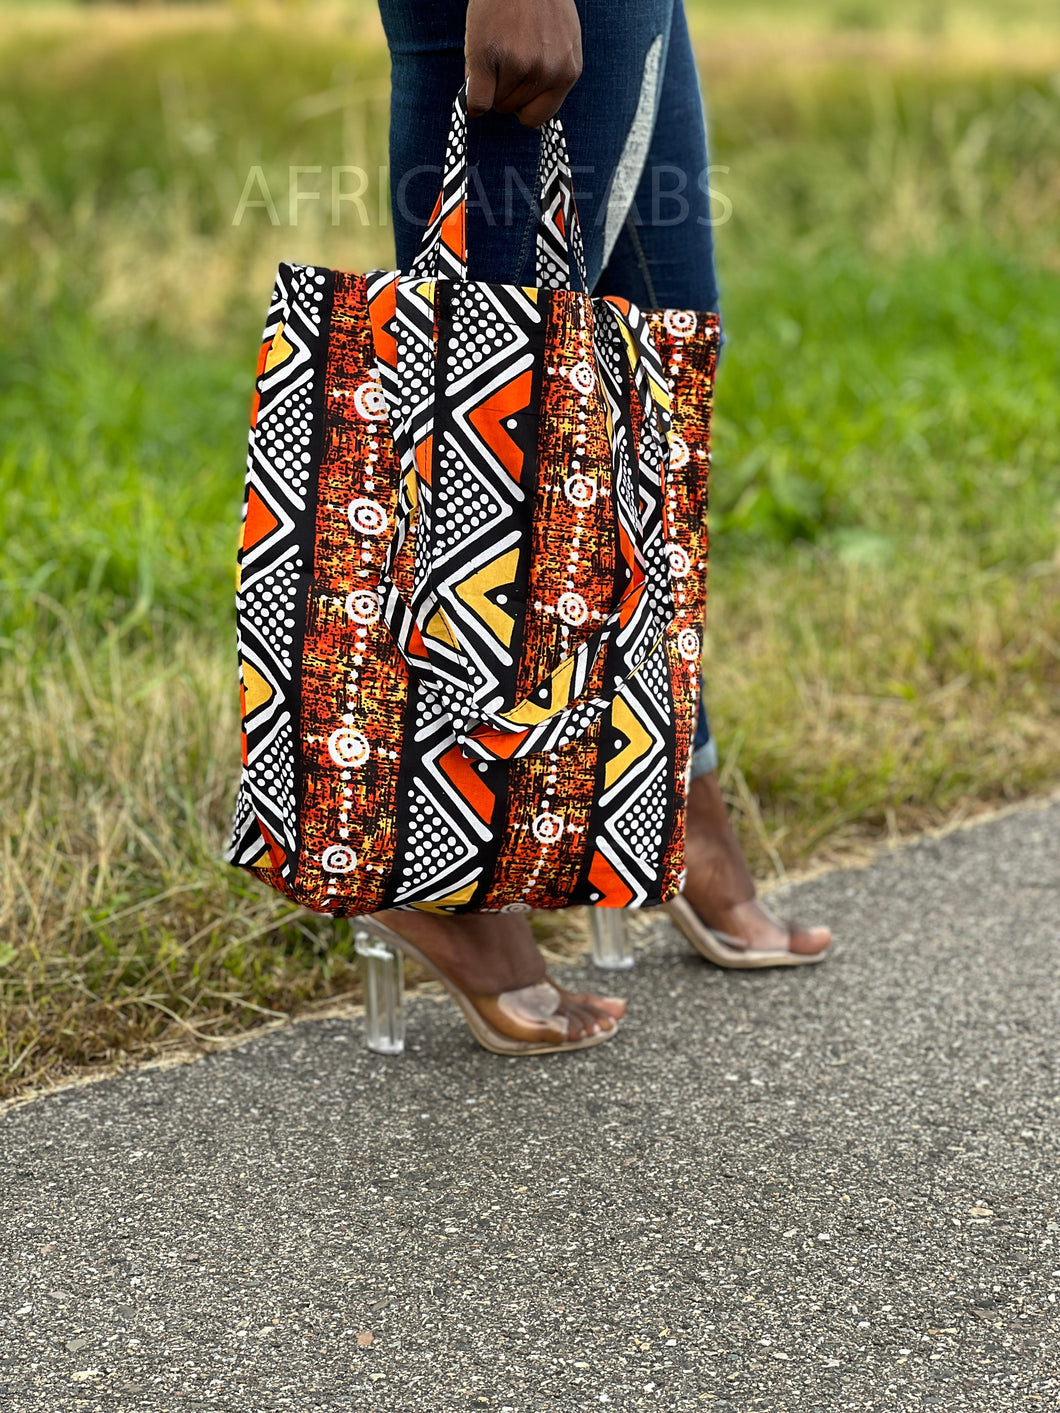 Shopper bag with African print - Orange bogolan - Reusable Shopping Bag made of cotton